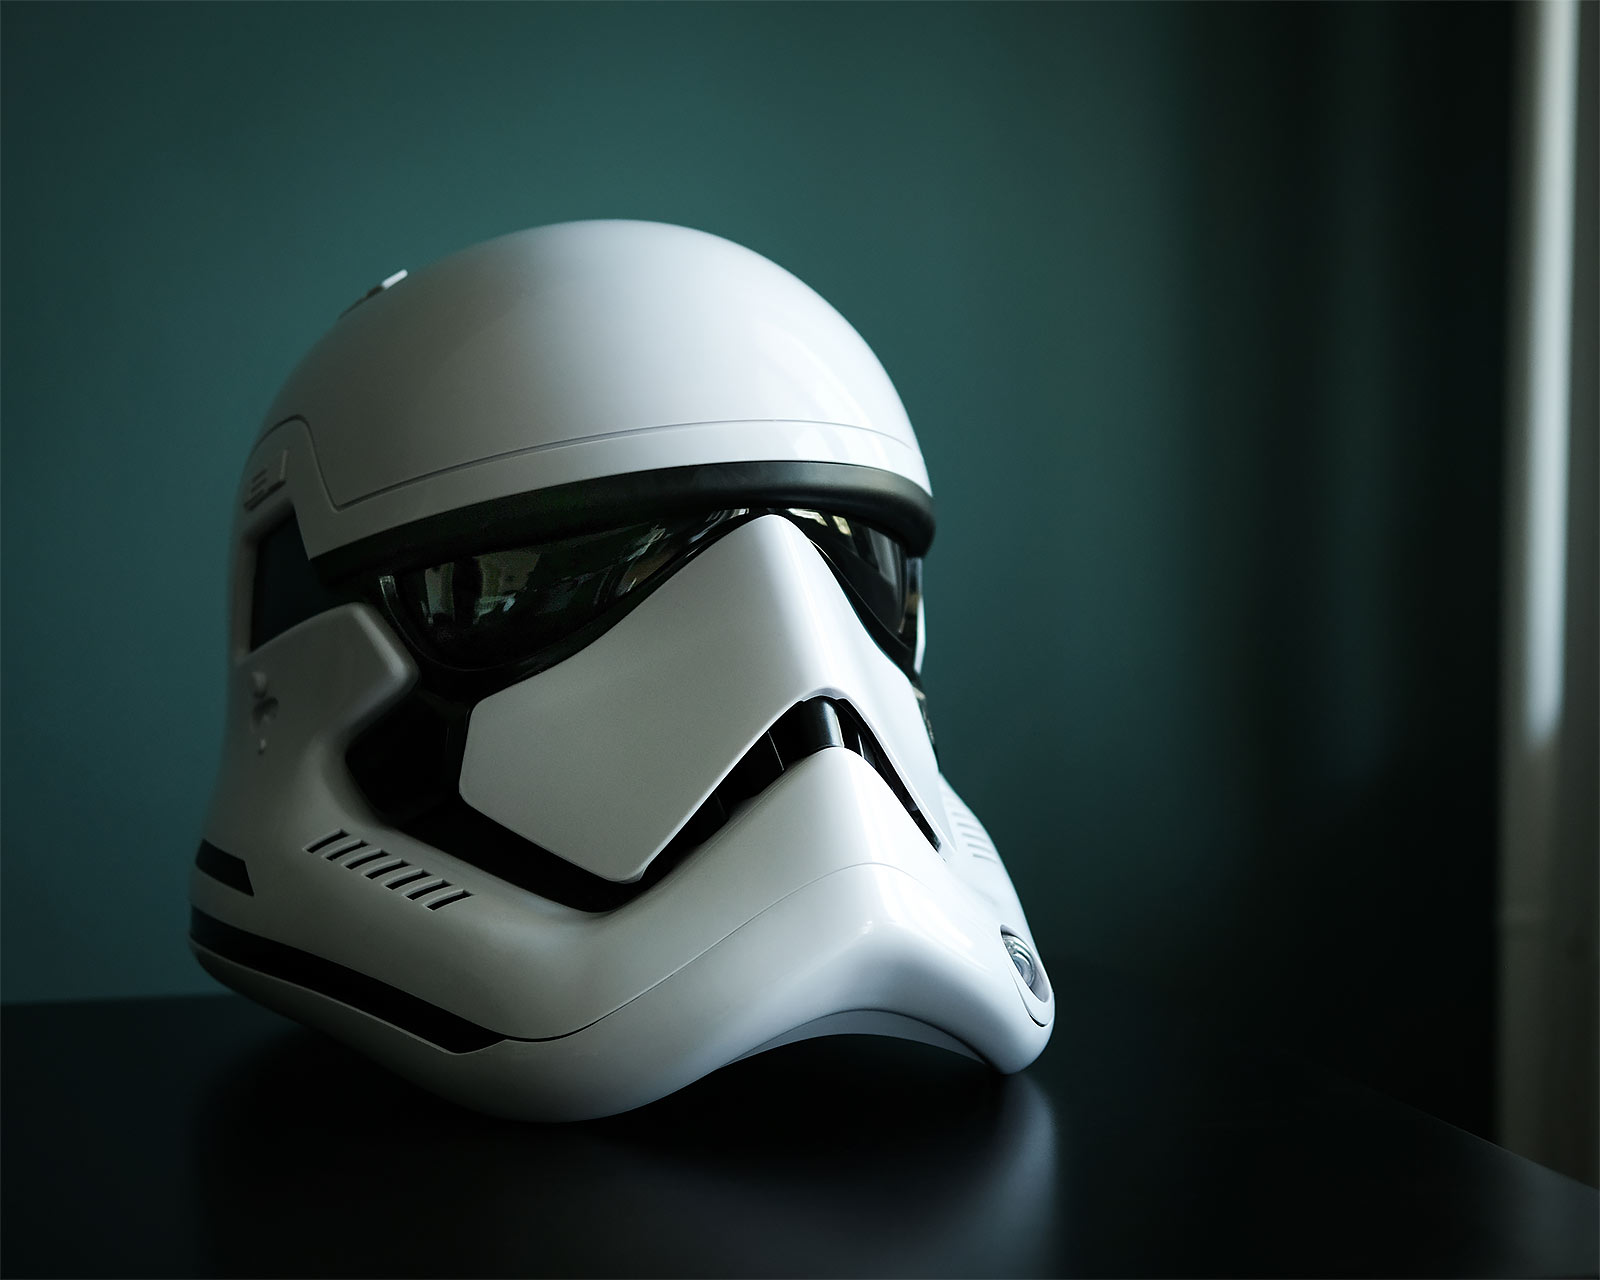 First Order Stormtrooper Helmet Replica with Voice Changer - Star Wars